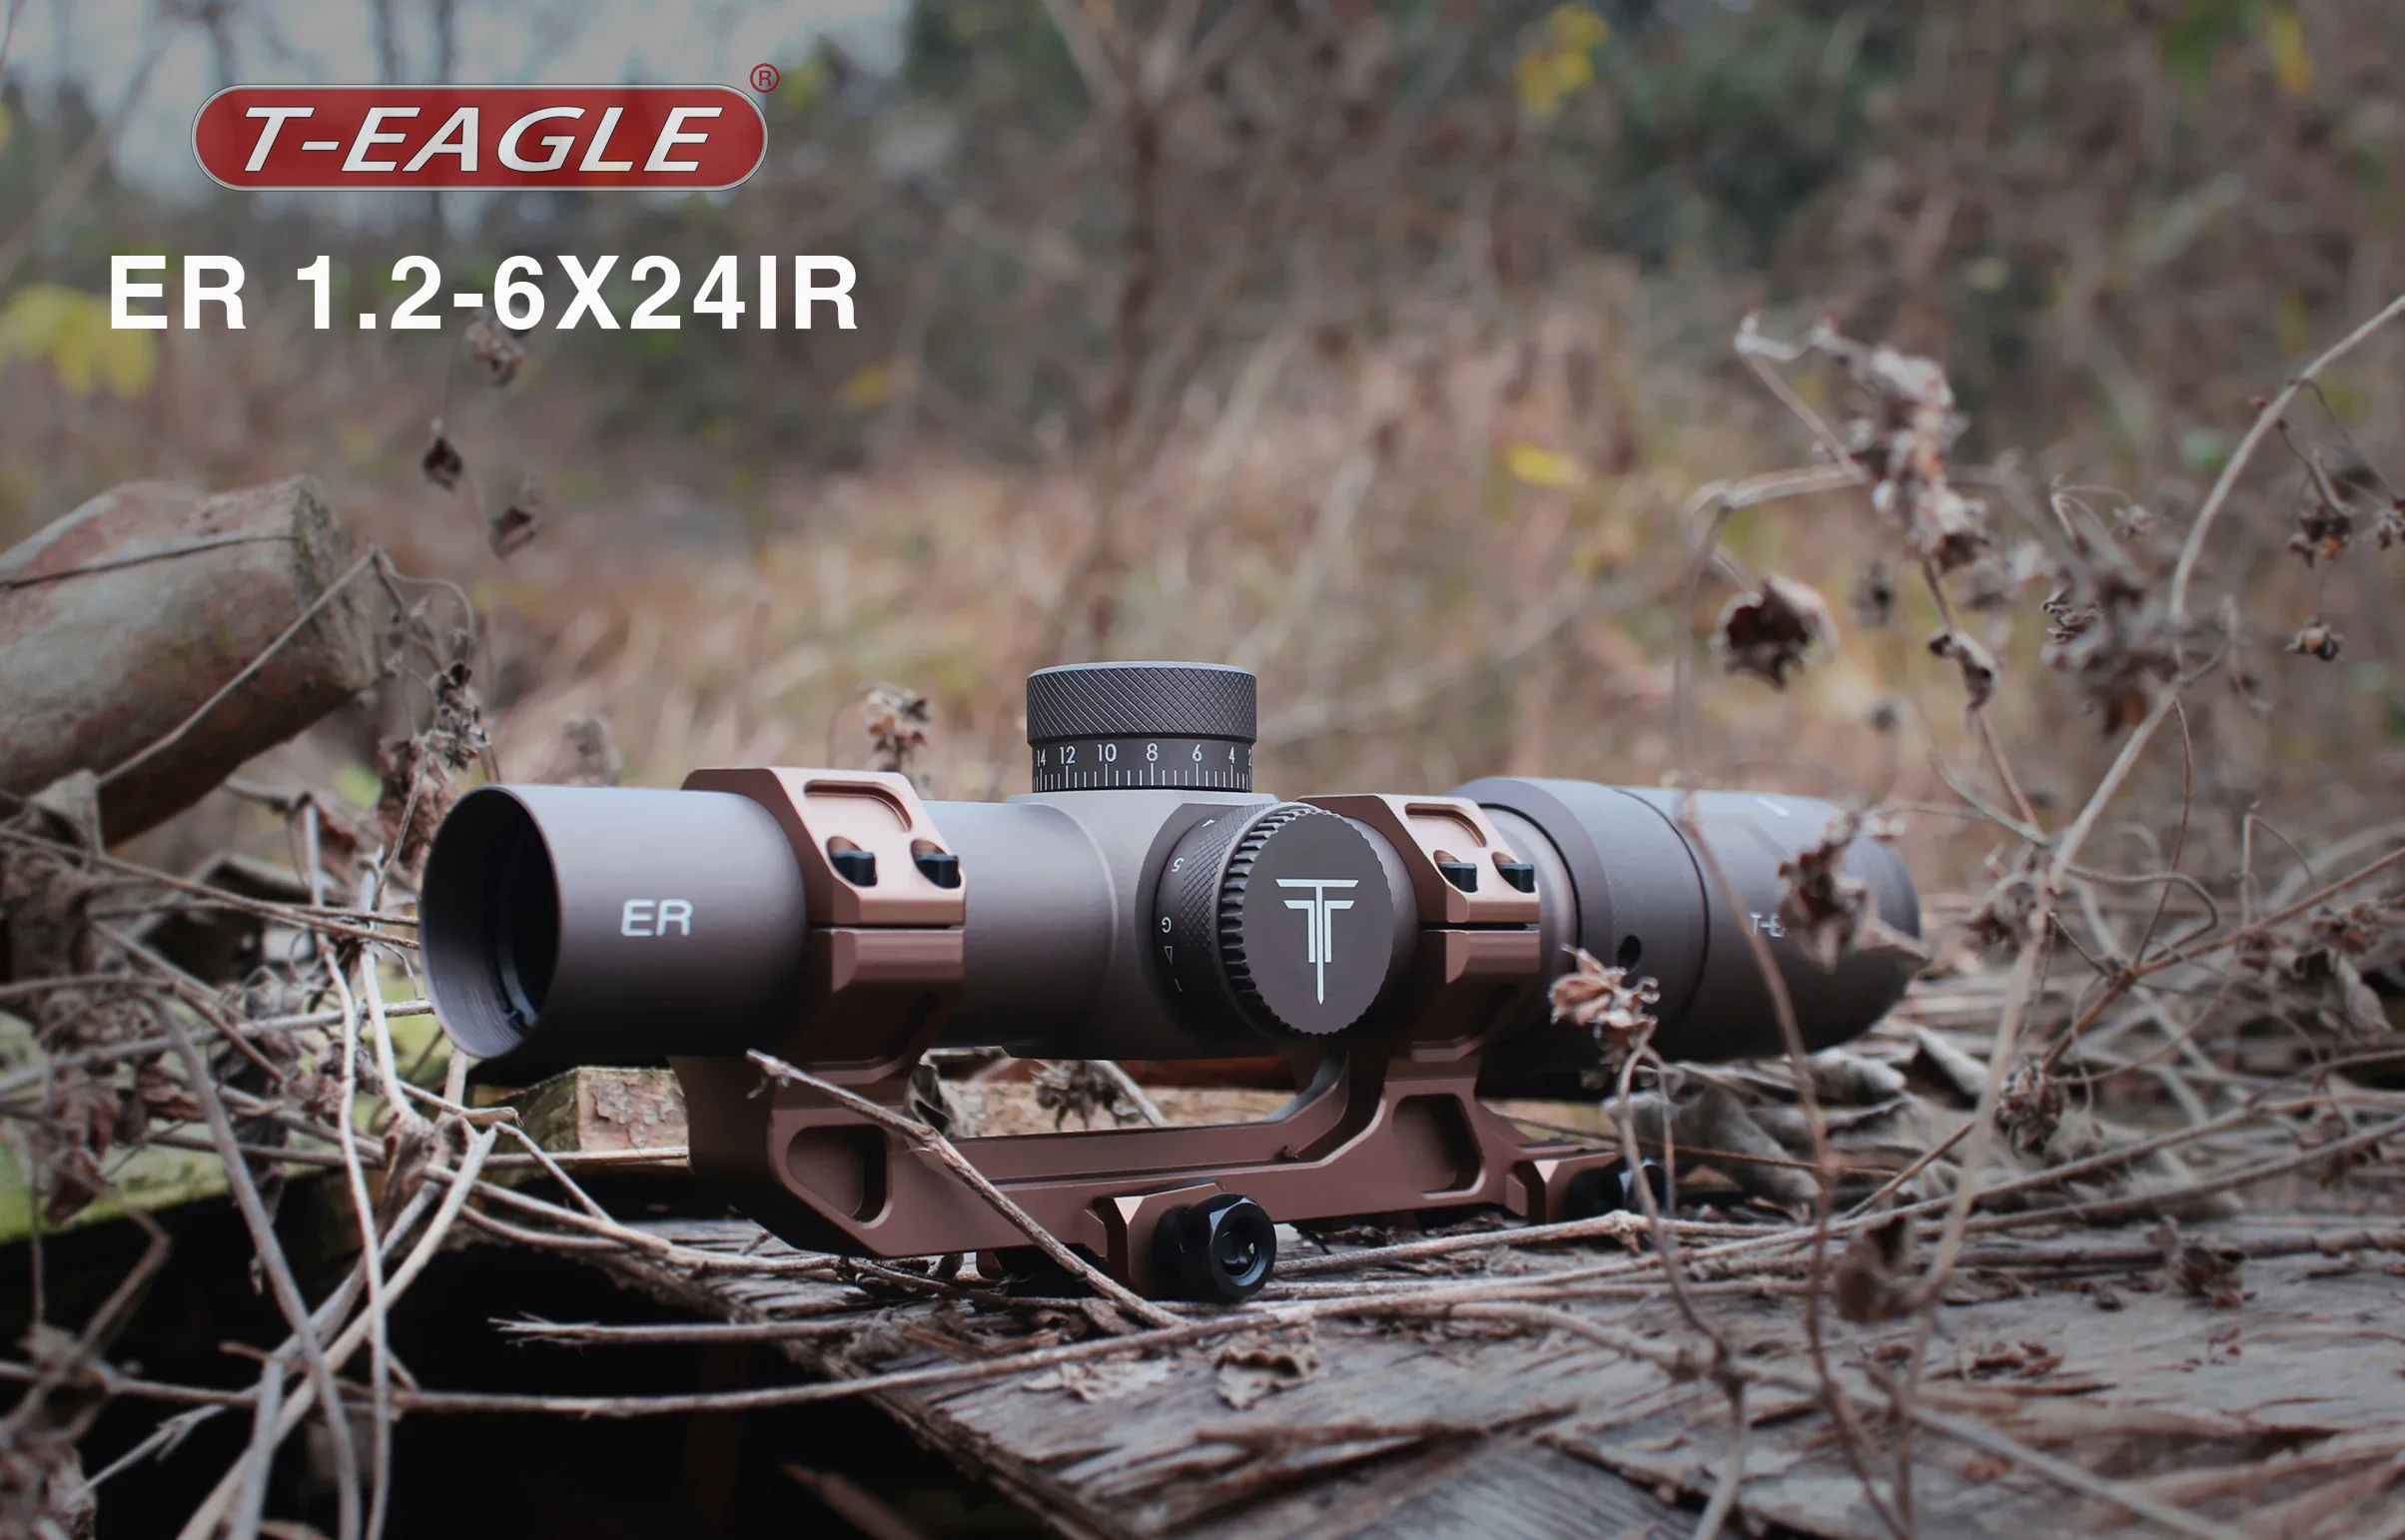 

Aluminum Tactical Optic Sight, Riflescope, Sniper, Airsoft, Air Guns, Red Dot, Mounts for Hunting, ER 1.2-6X24 IR